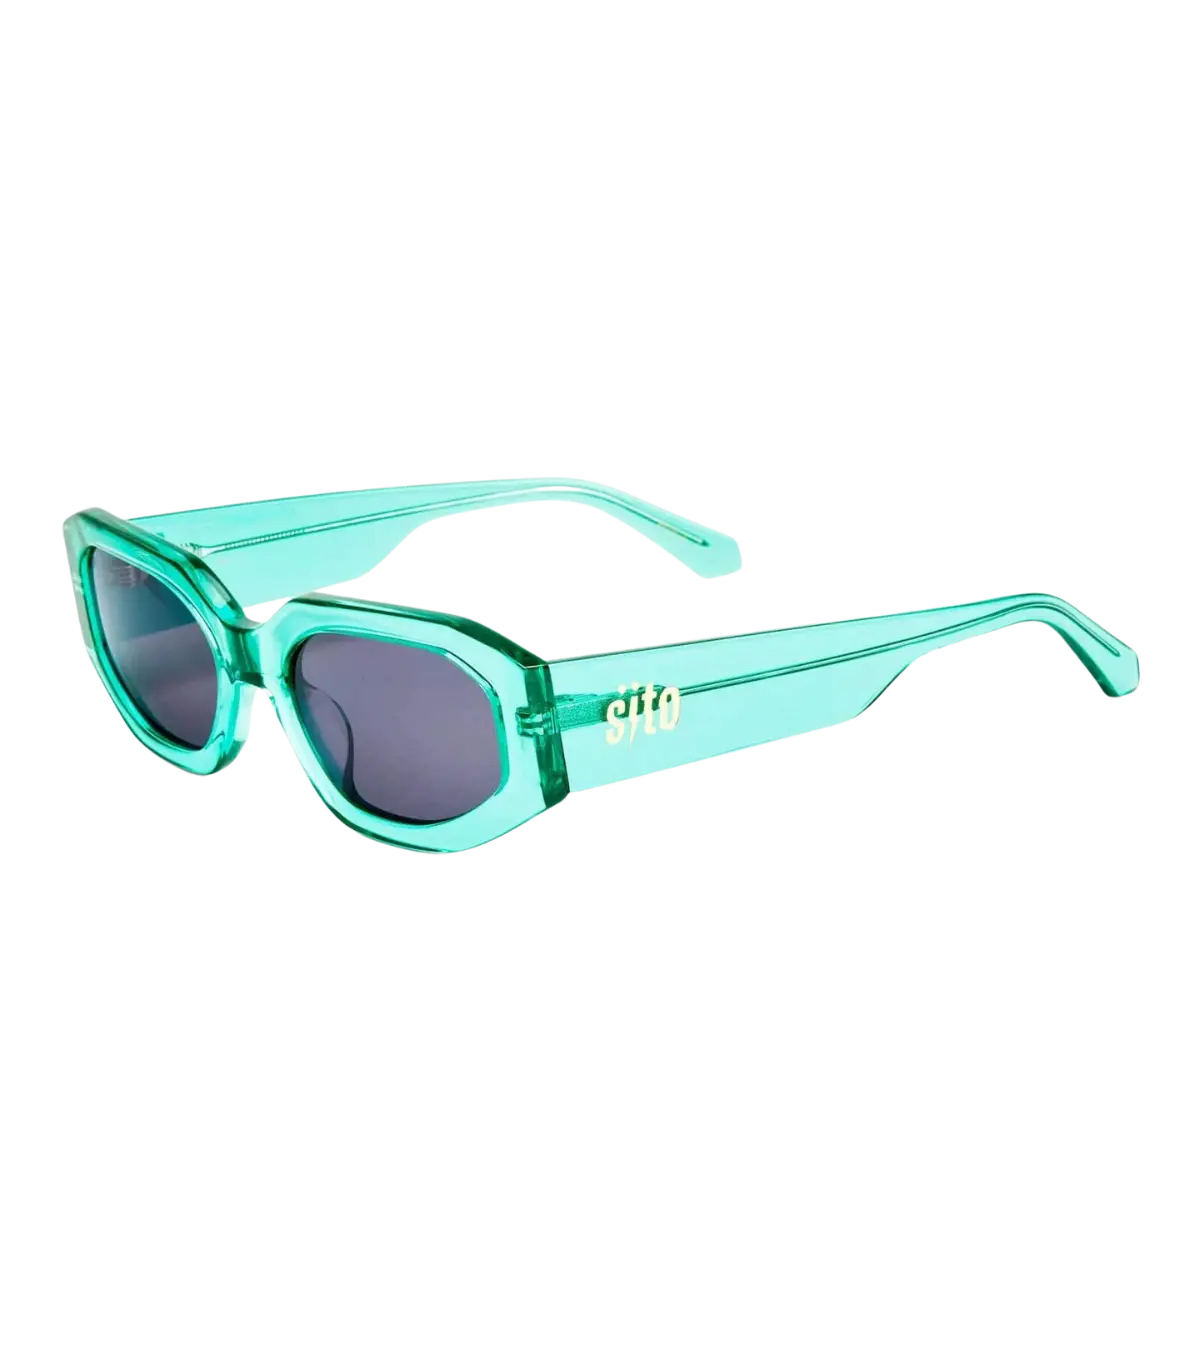 Sito, Juicy Polarized Sunglasses (Appletini)